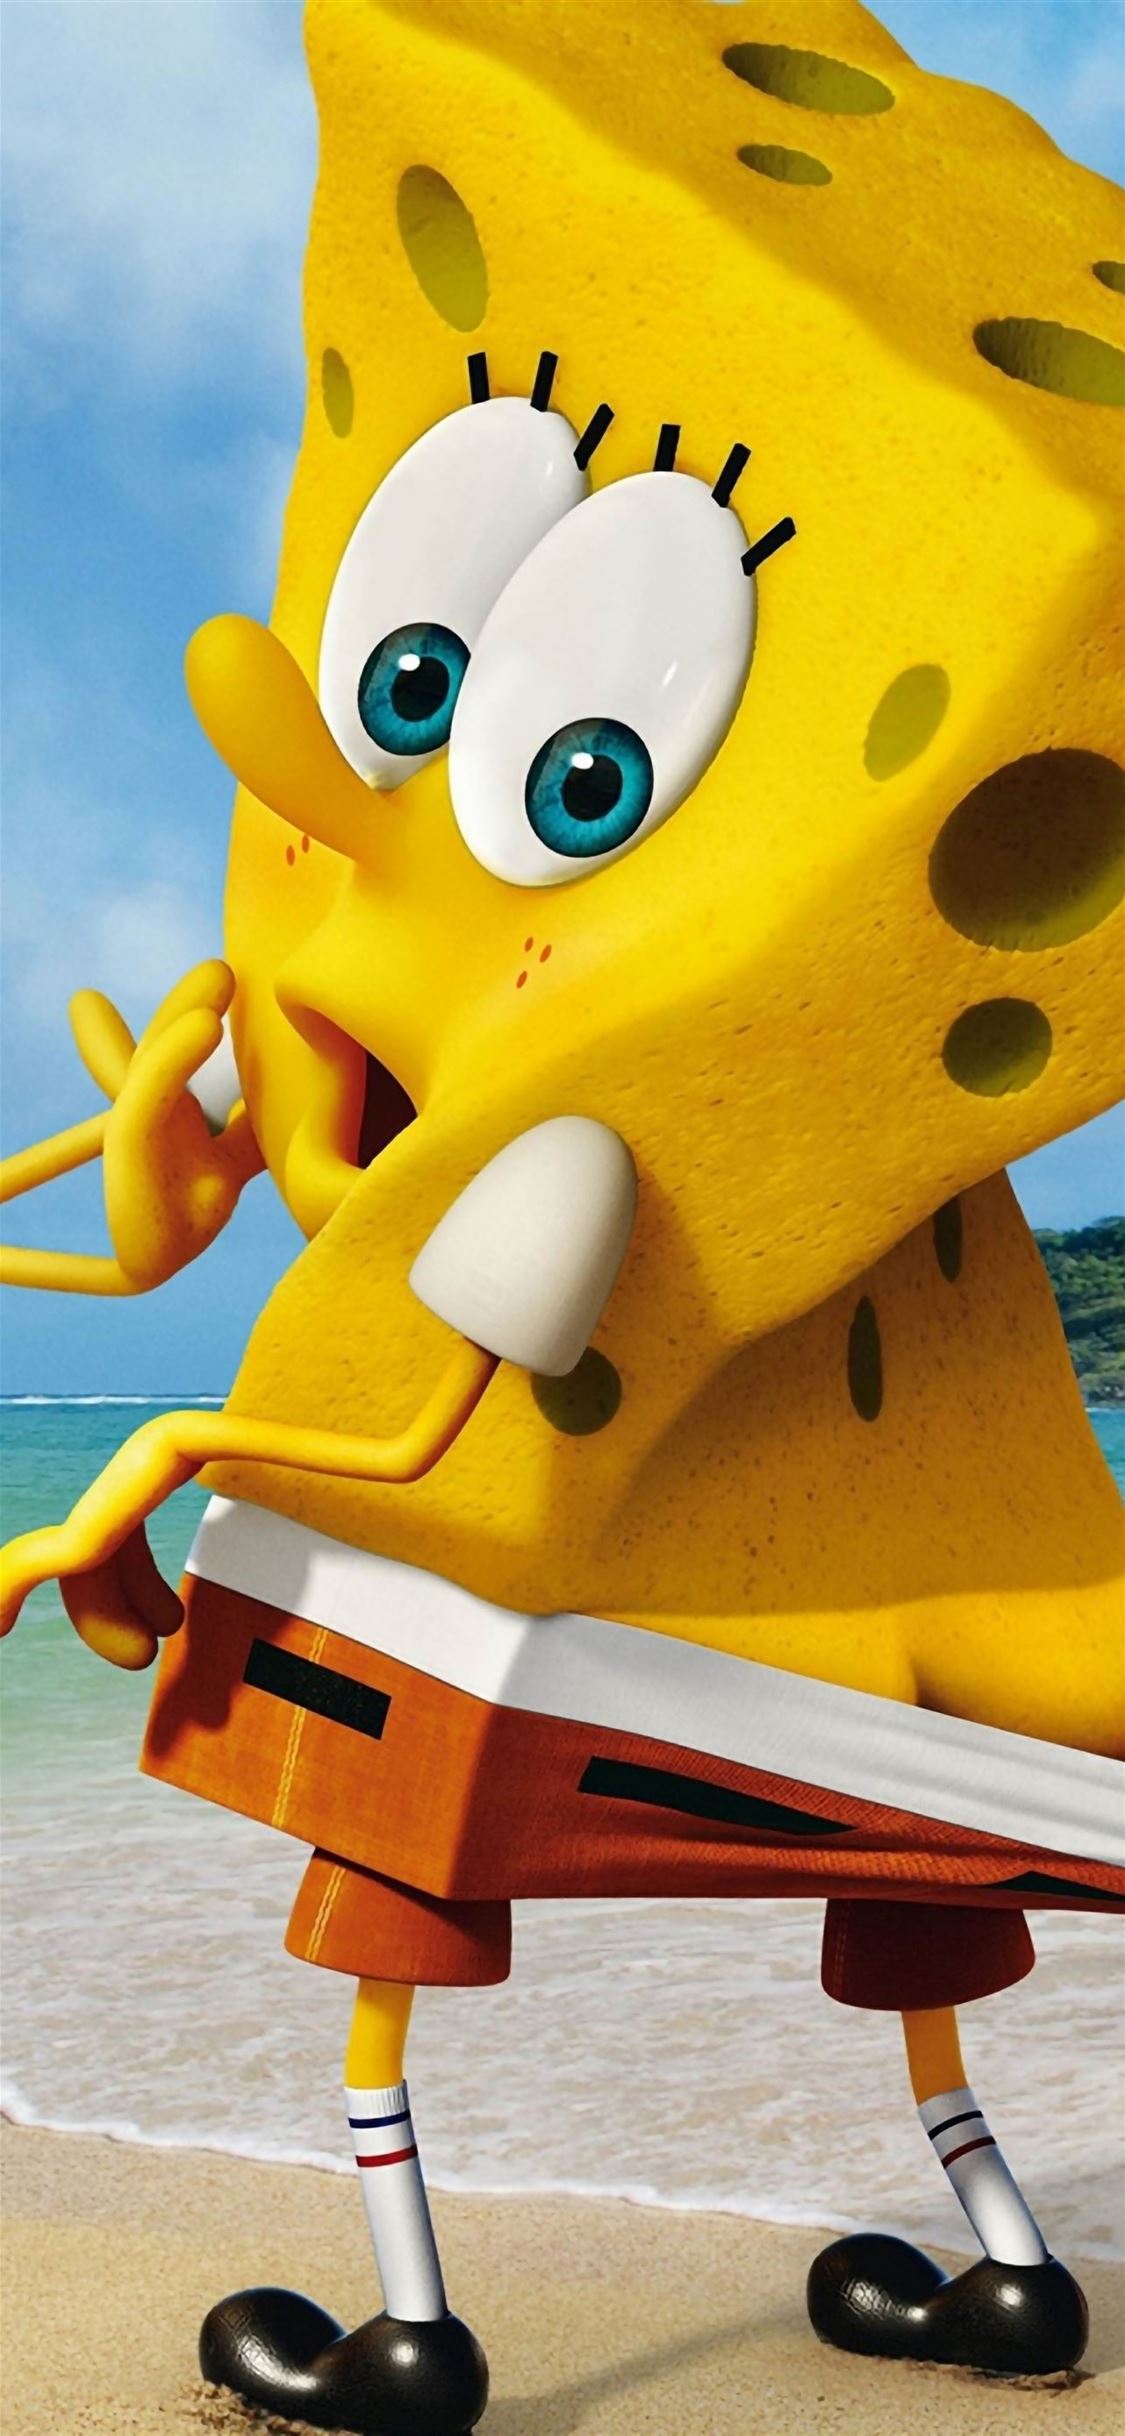 Funny Spongebob Squarepants iPhone wallpaper 